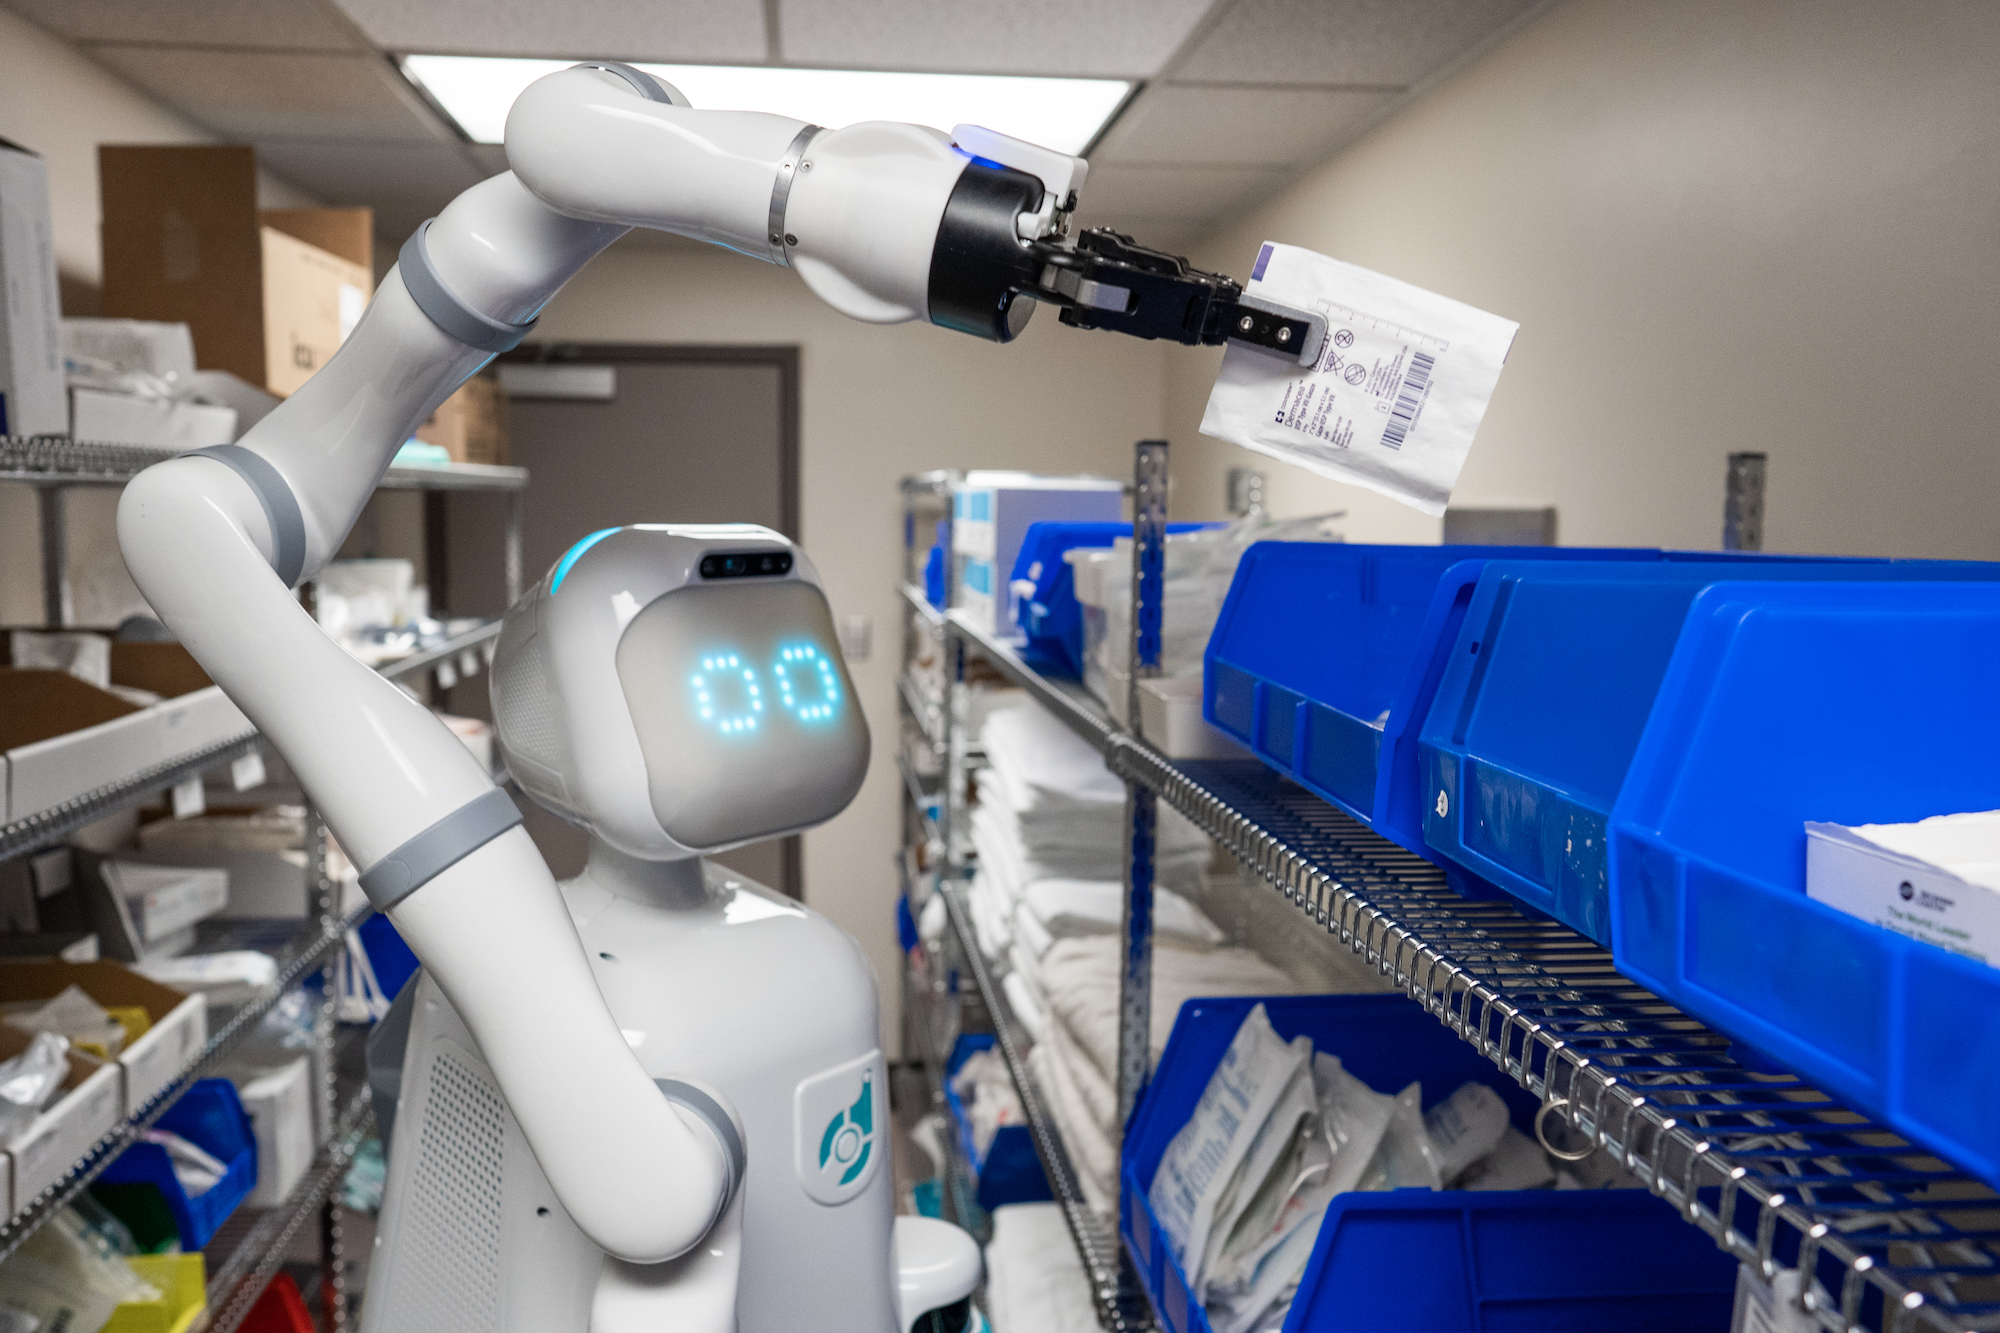 Hospital droid Diligent Robotics raises $10M to assist nurses – TechCrunch